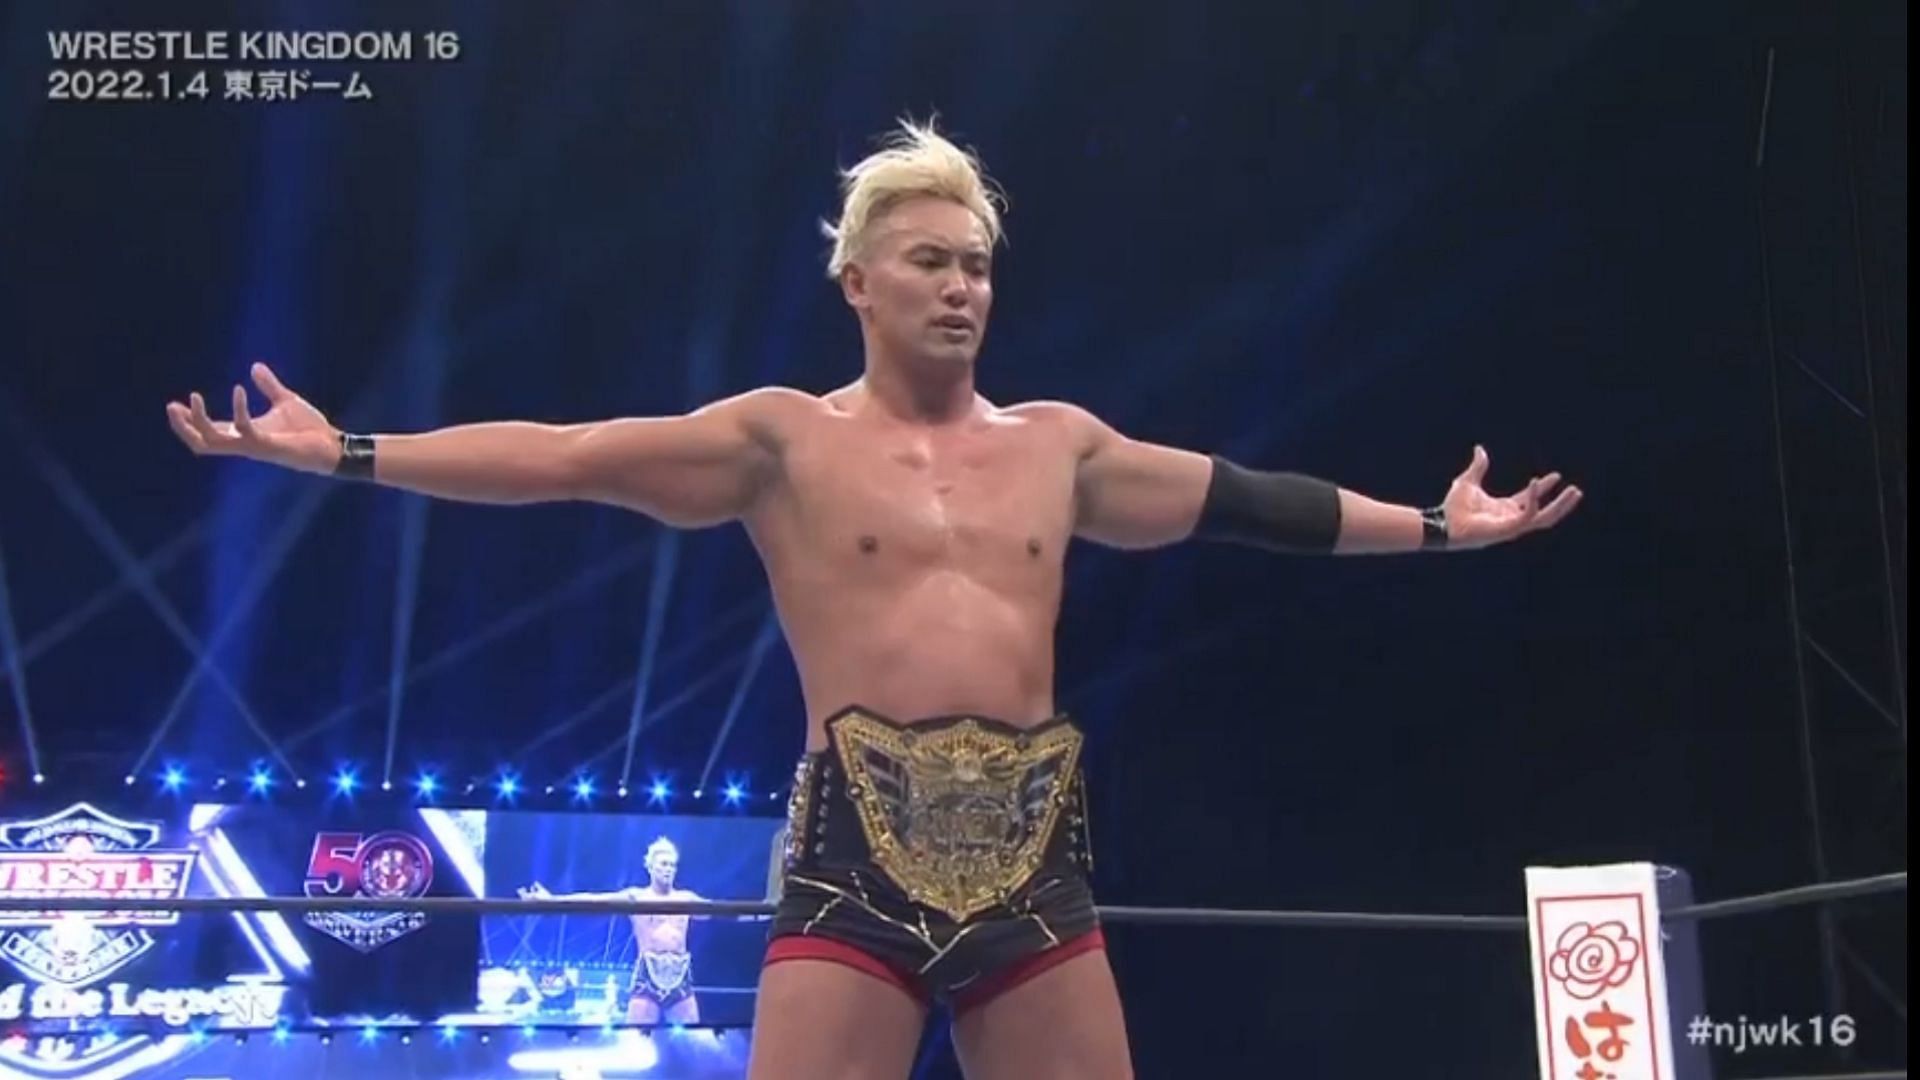 Kazuchika Okada is the new IWGP World Heavyweight Champion.